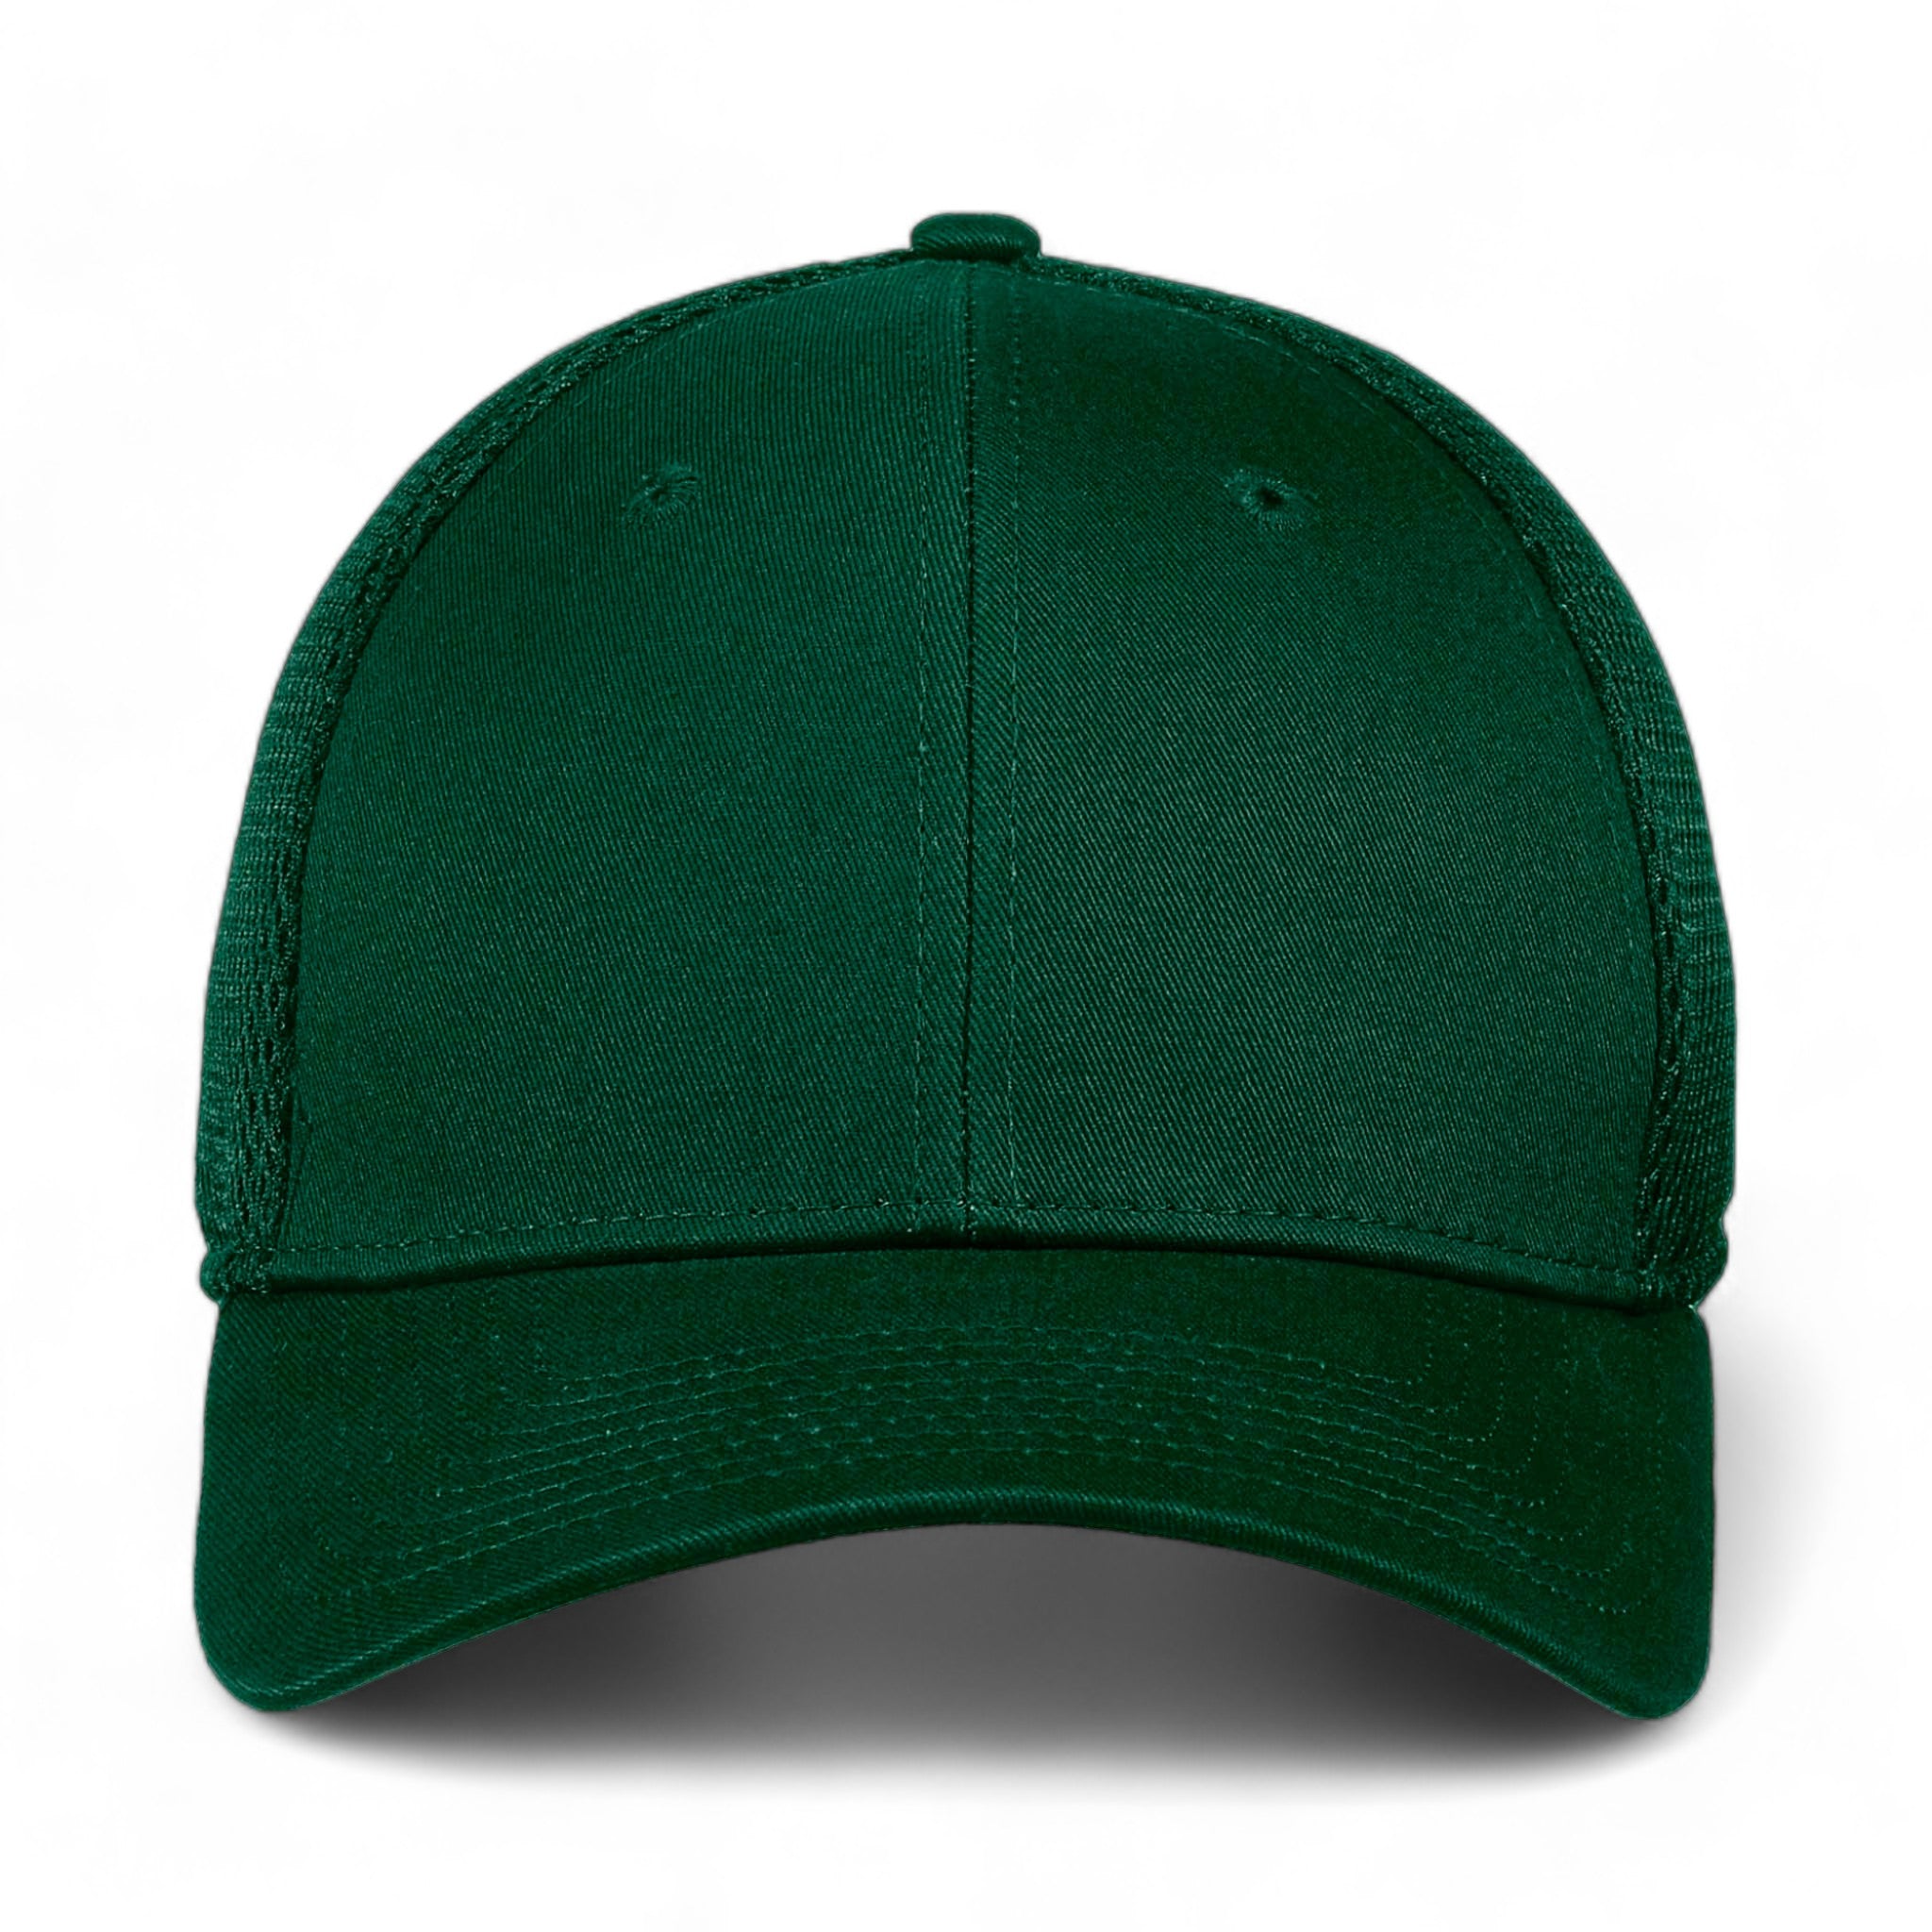 Front view of New Era NE1020 custom hat in dark green